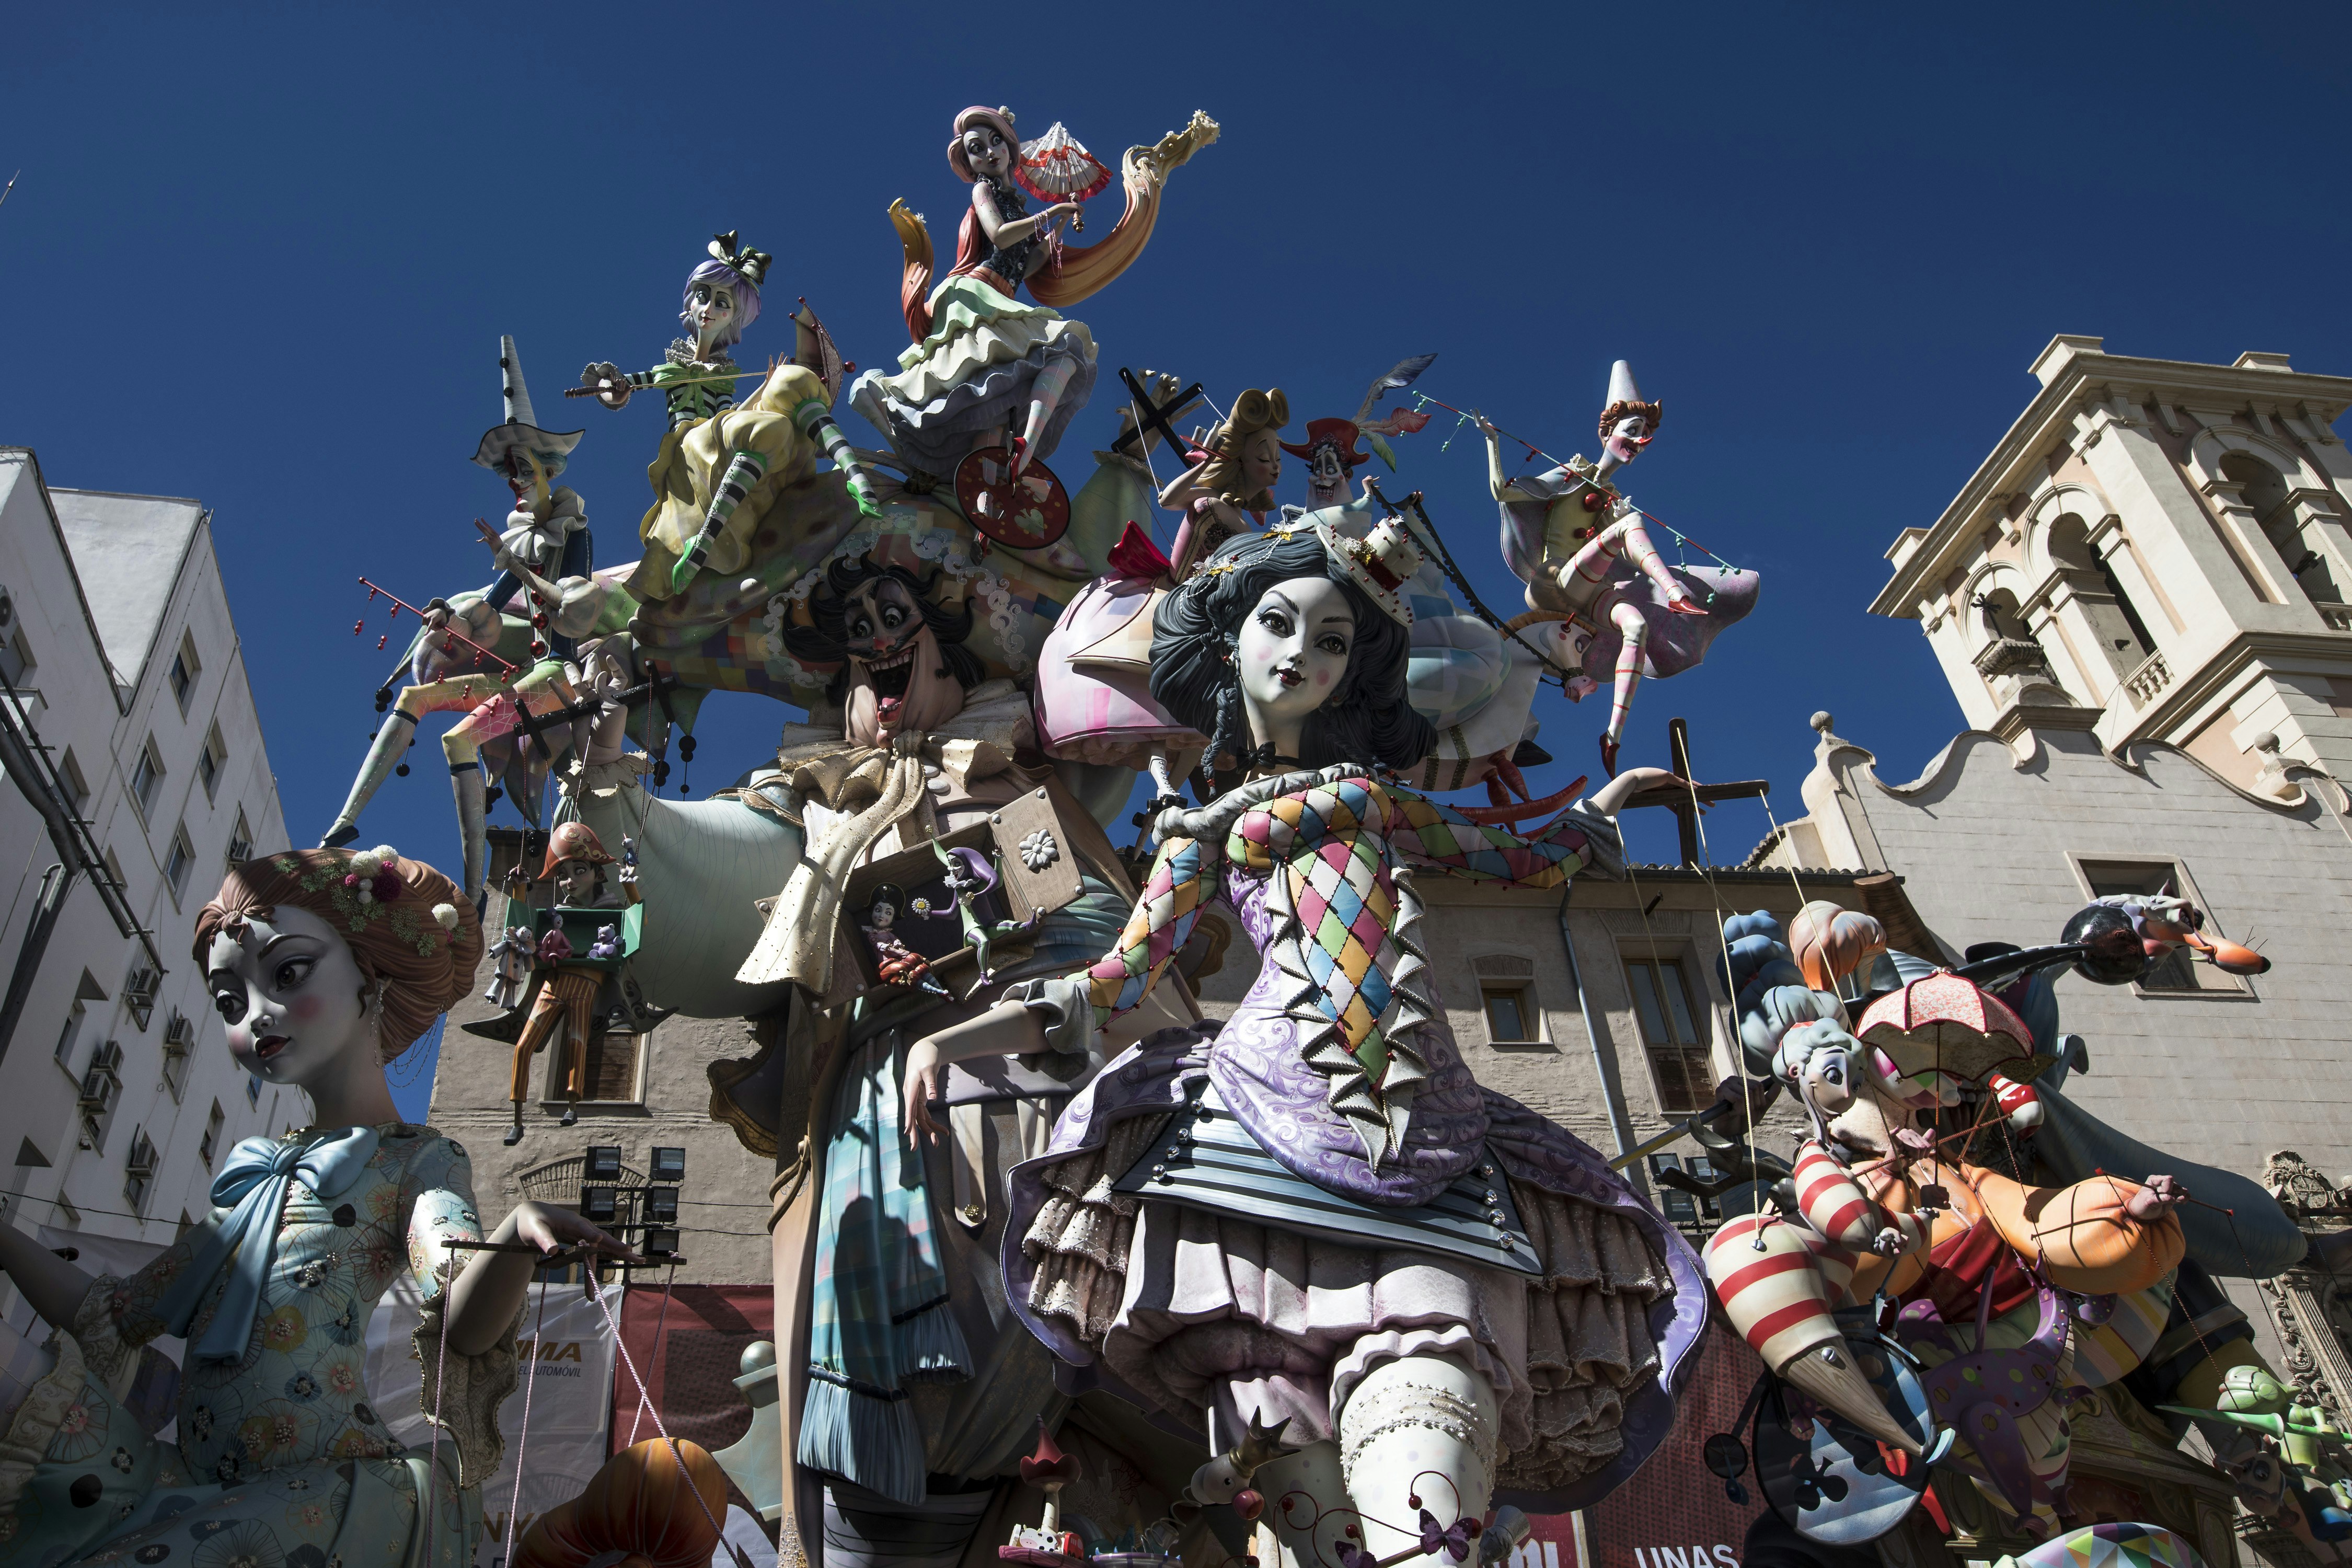 Giant papier-mache dolls in the street at Valencia's Las Fallas celebrations 